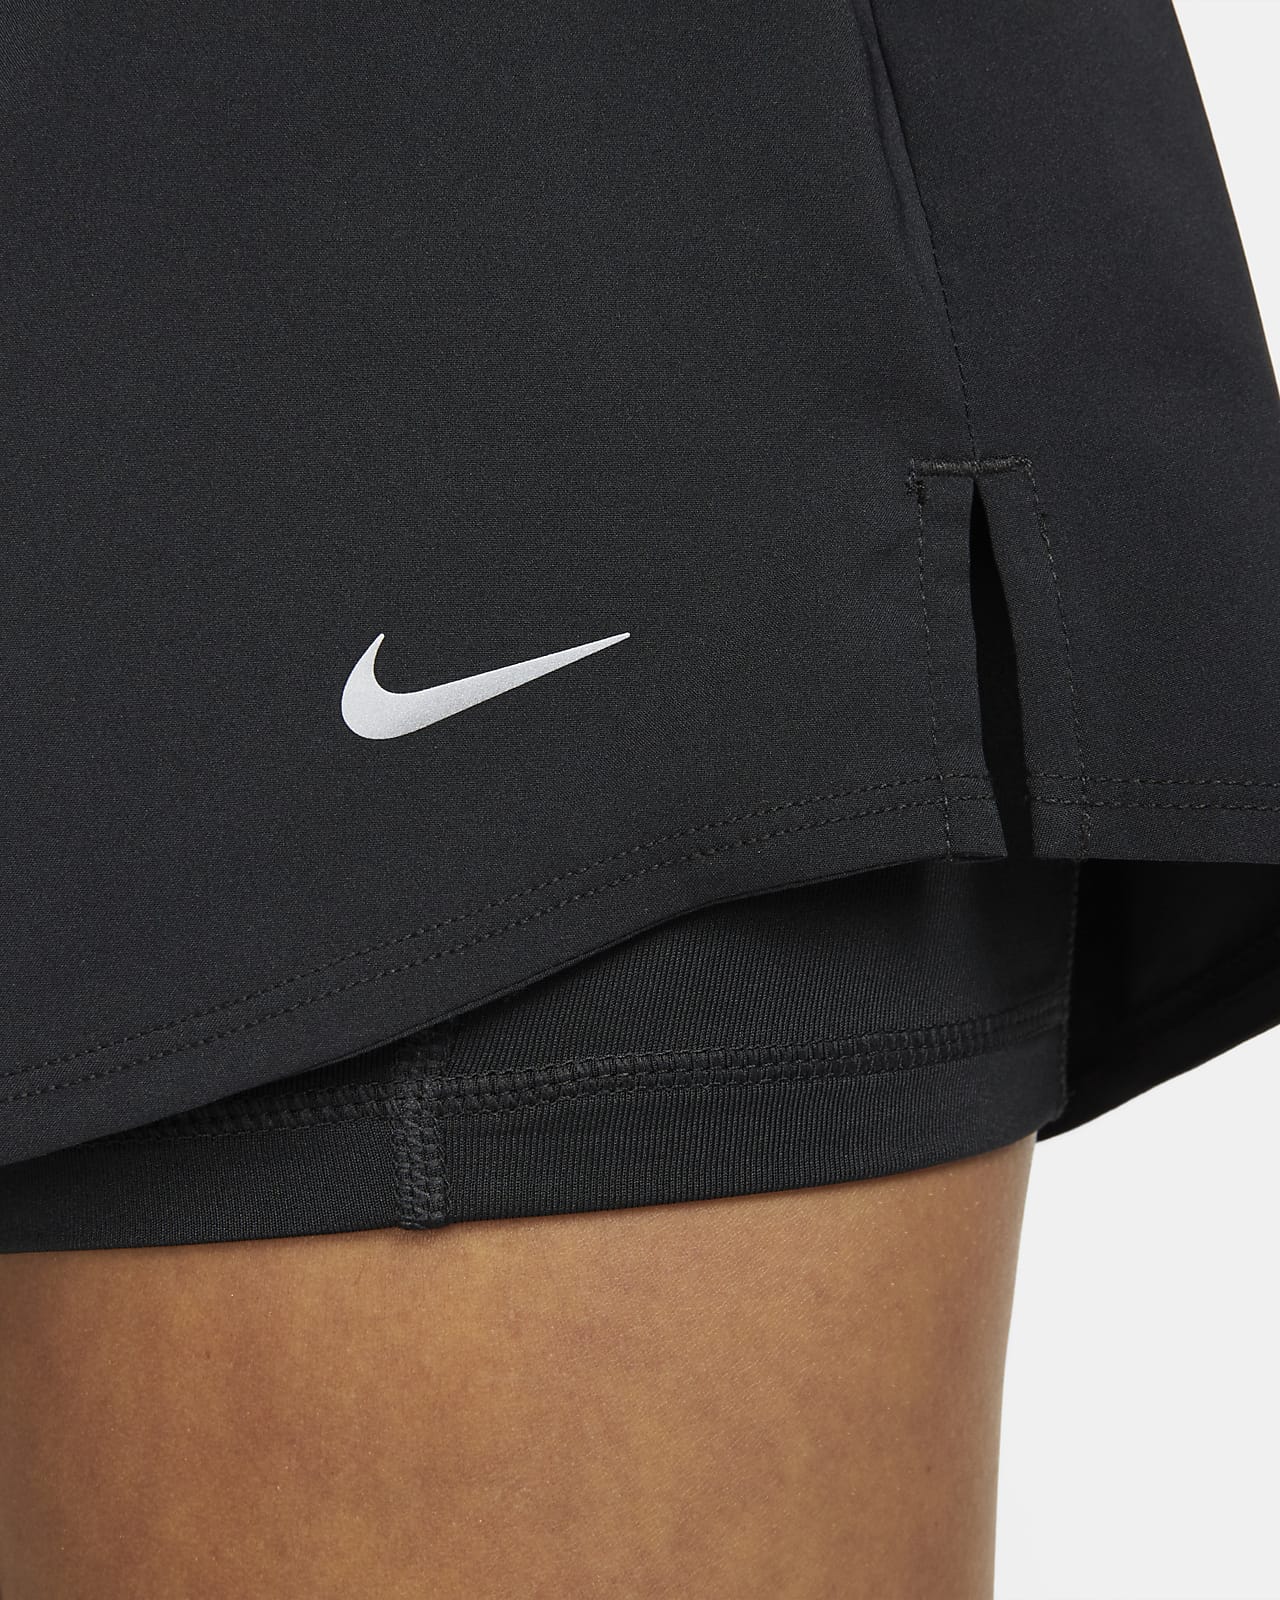 Nike One Women's Dri-FIT High-Waisted 8cm (approx.) 2-in-1 Shorts. Nike LU